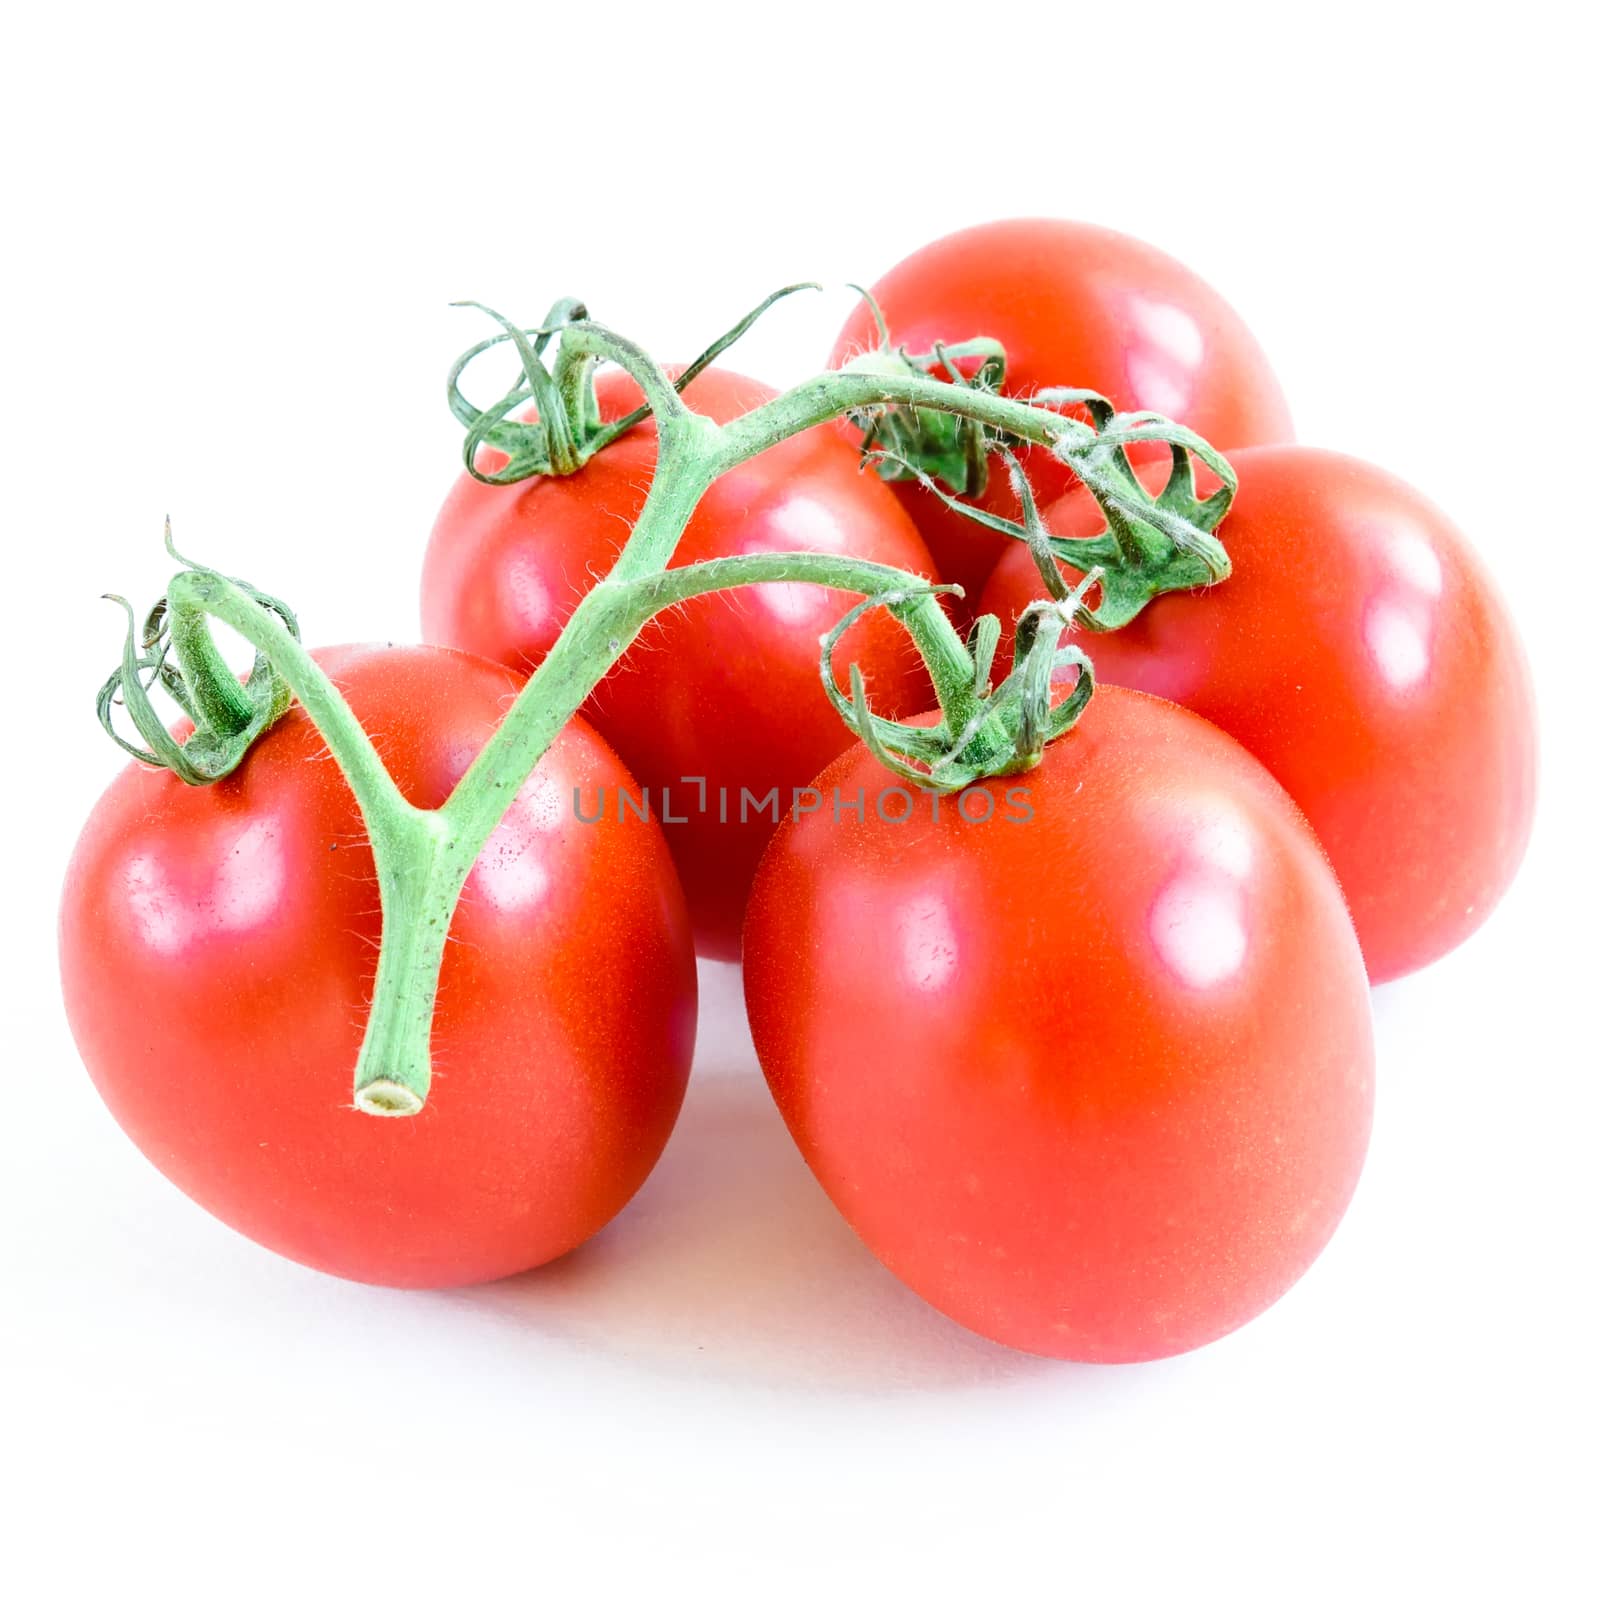 Studio shot organic four on vine ripened Roma tomatoes isolated on white background by trongnguyen